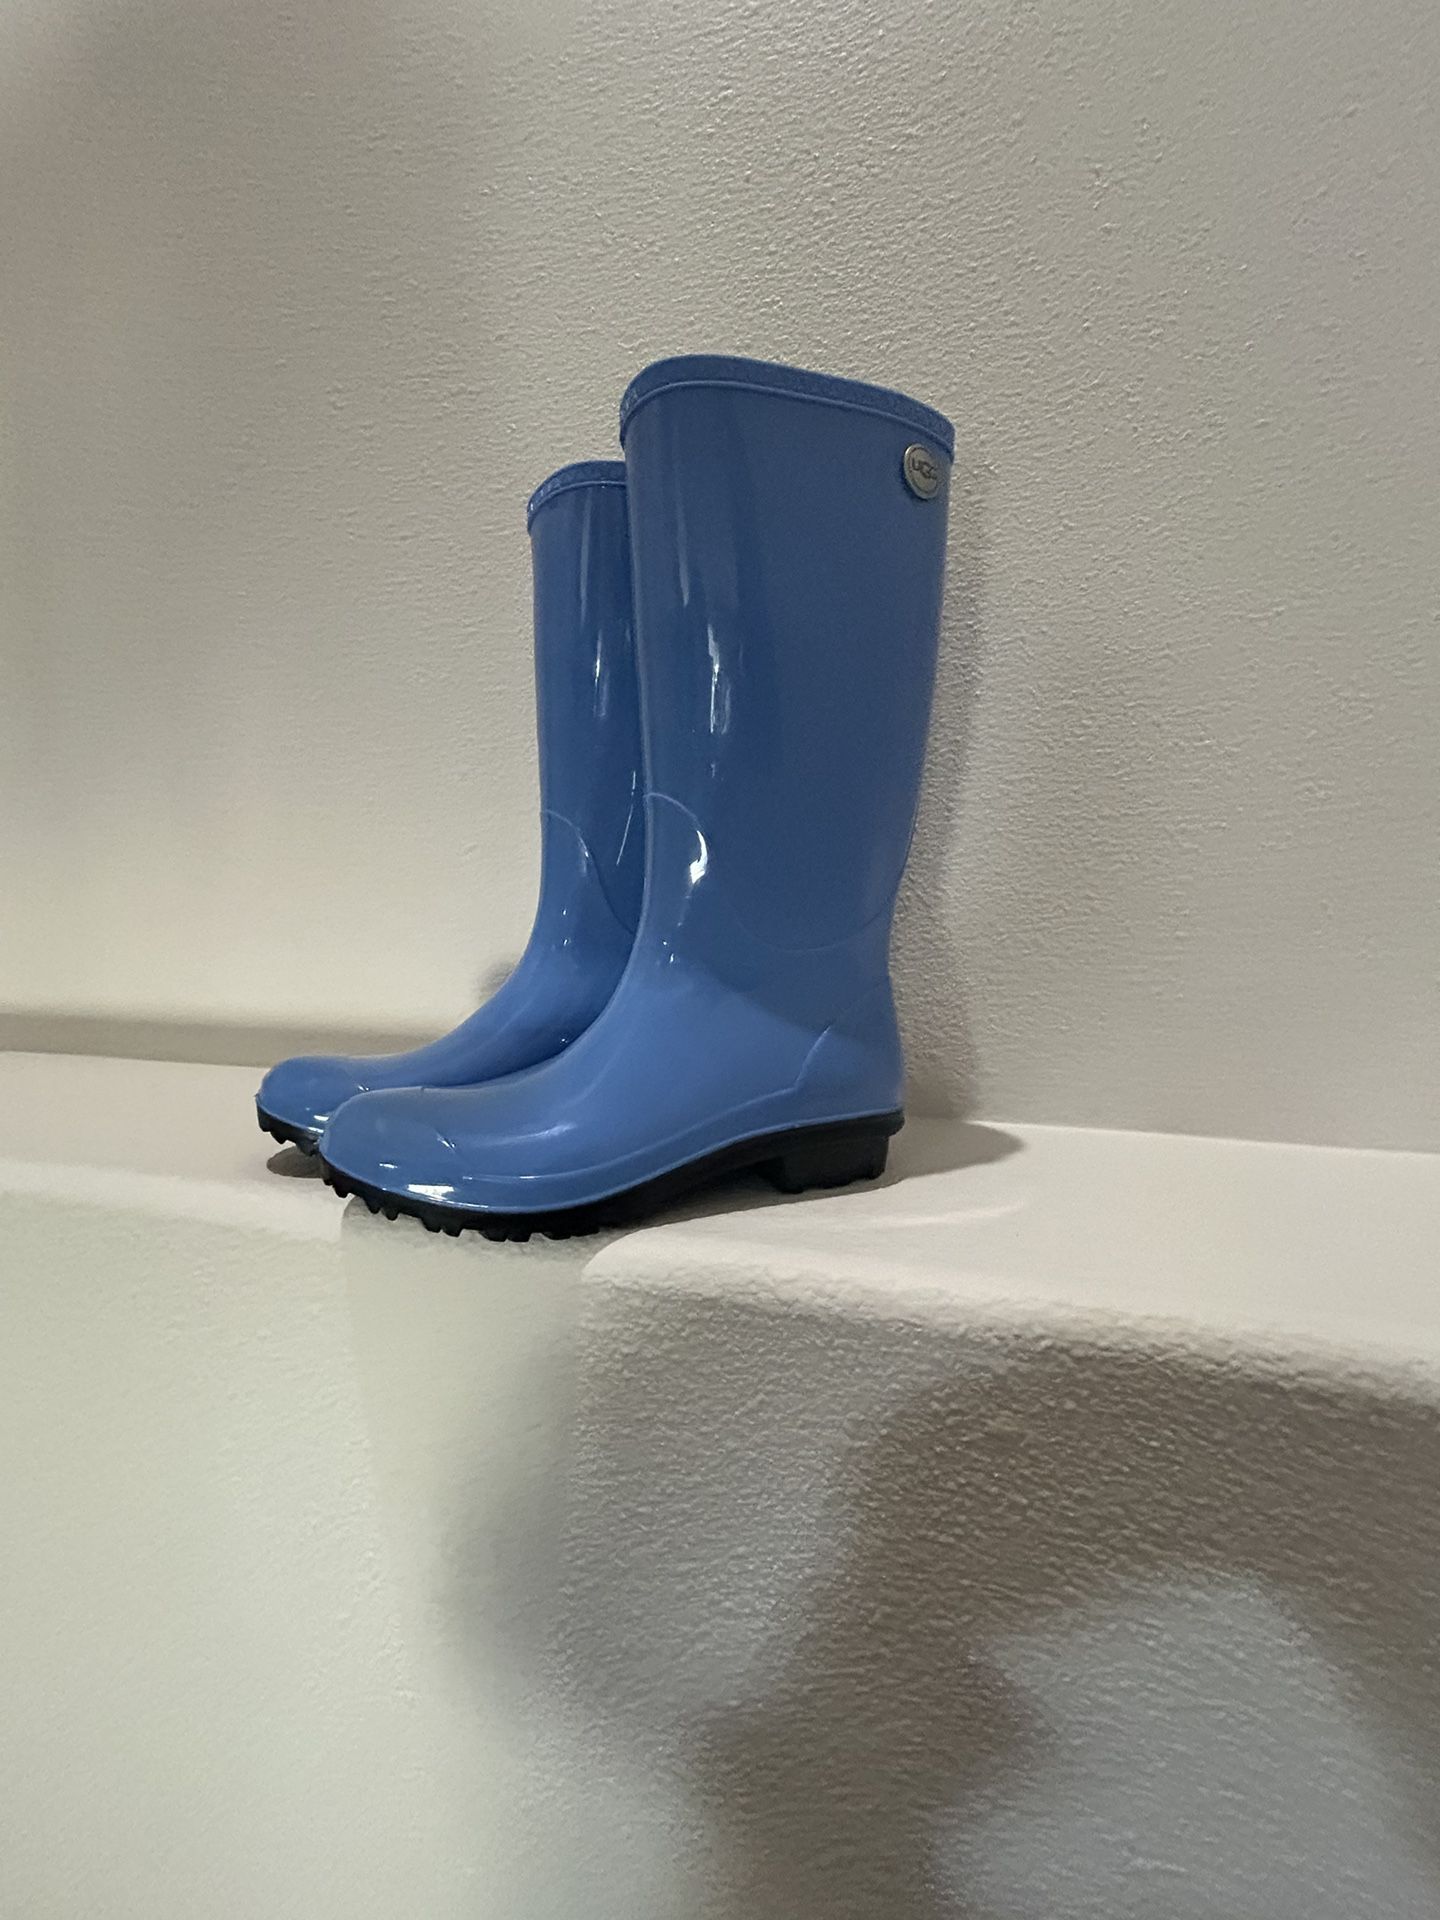 Brand New Ugg Shaye Skyline Blue Rain Boots